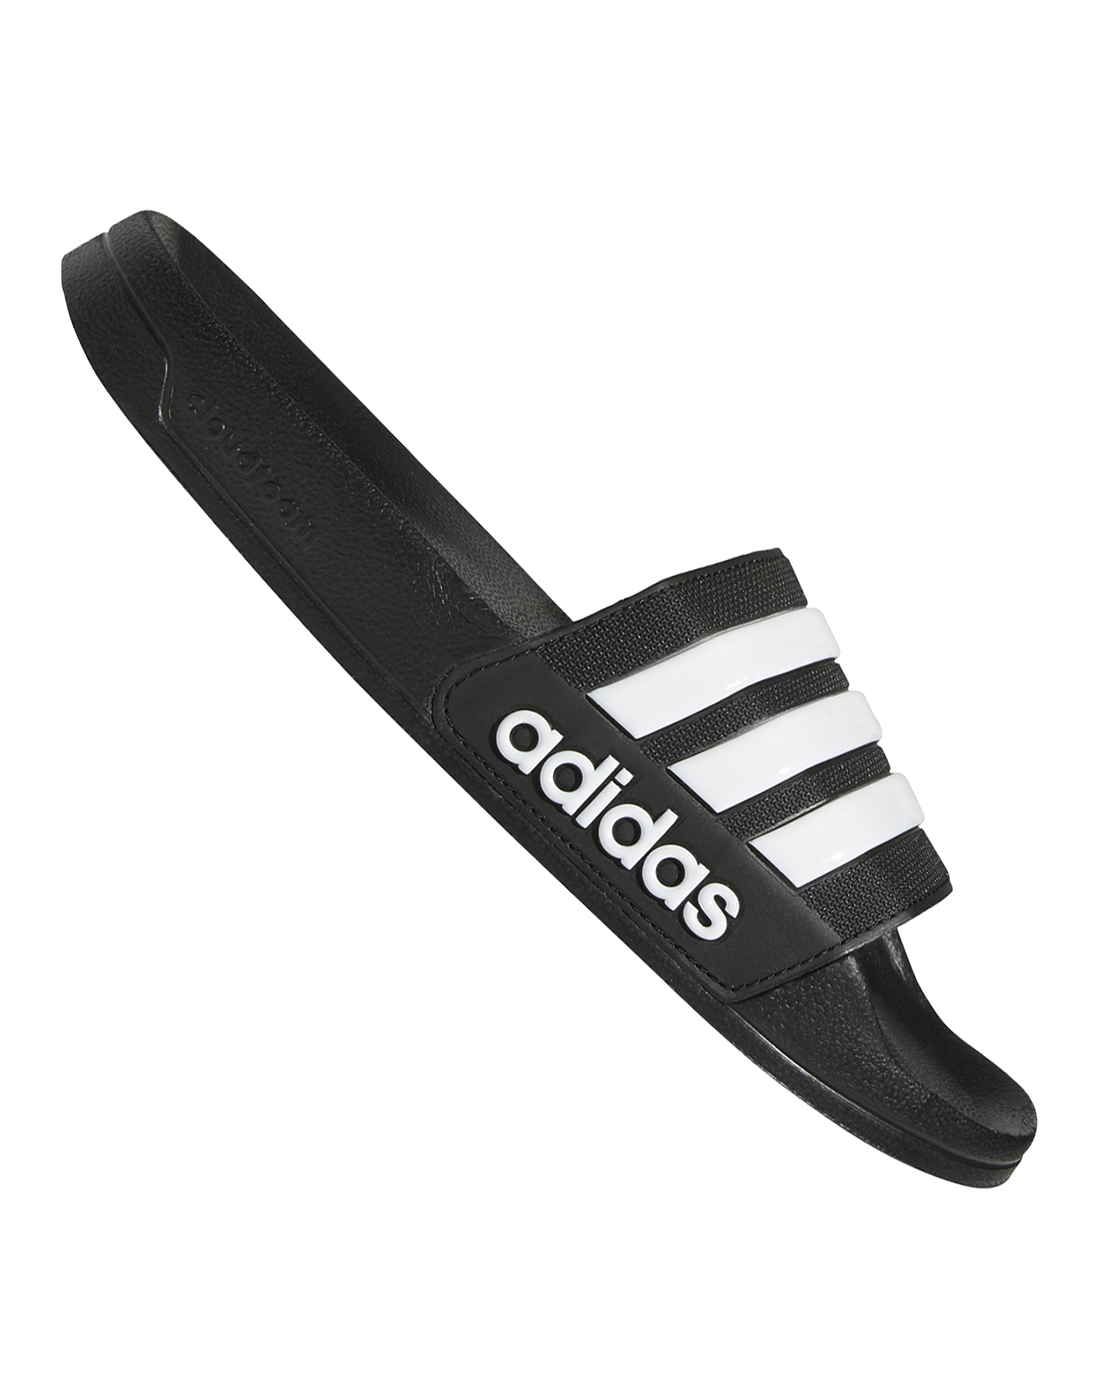 black and white adidas slides